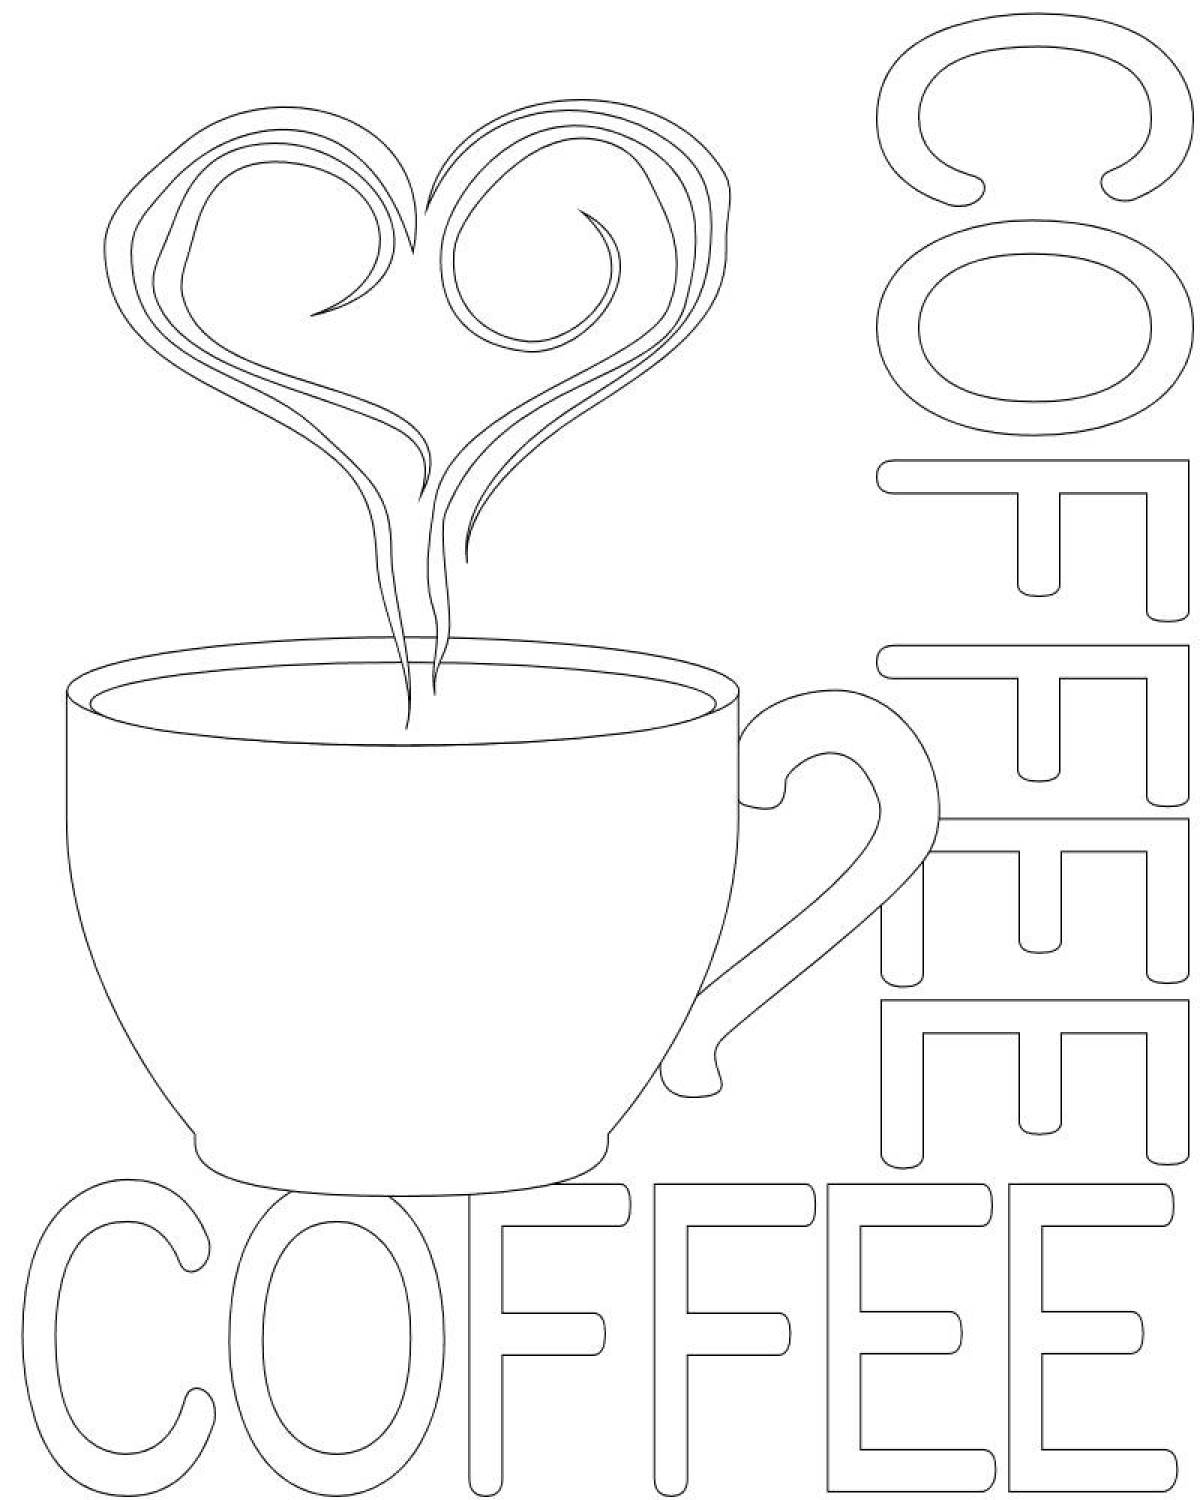 Cozy coffee coloring page